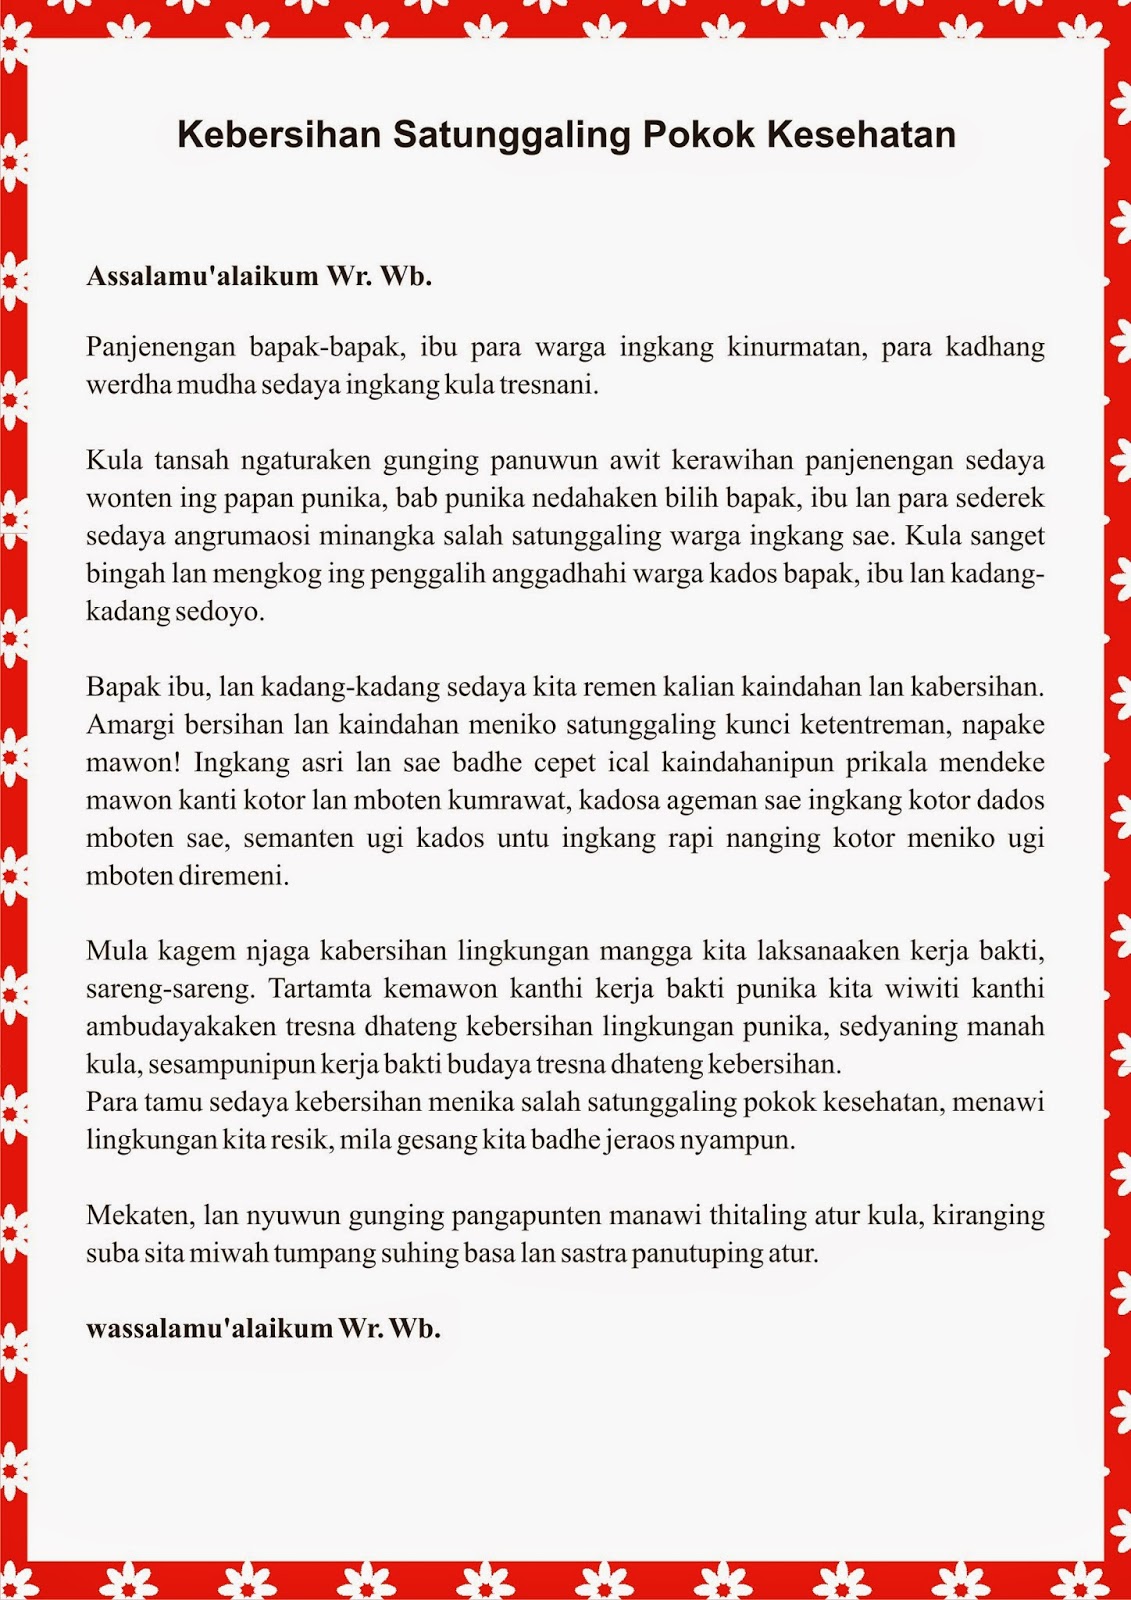 Contoh Lain Pidato Bahasa Jawa dengan Tema Kebersihan